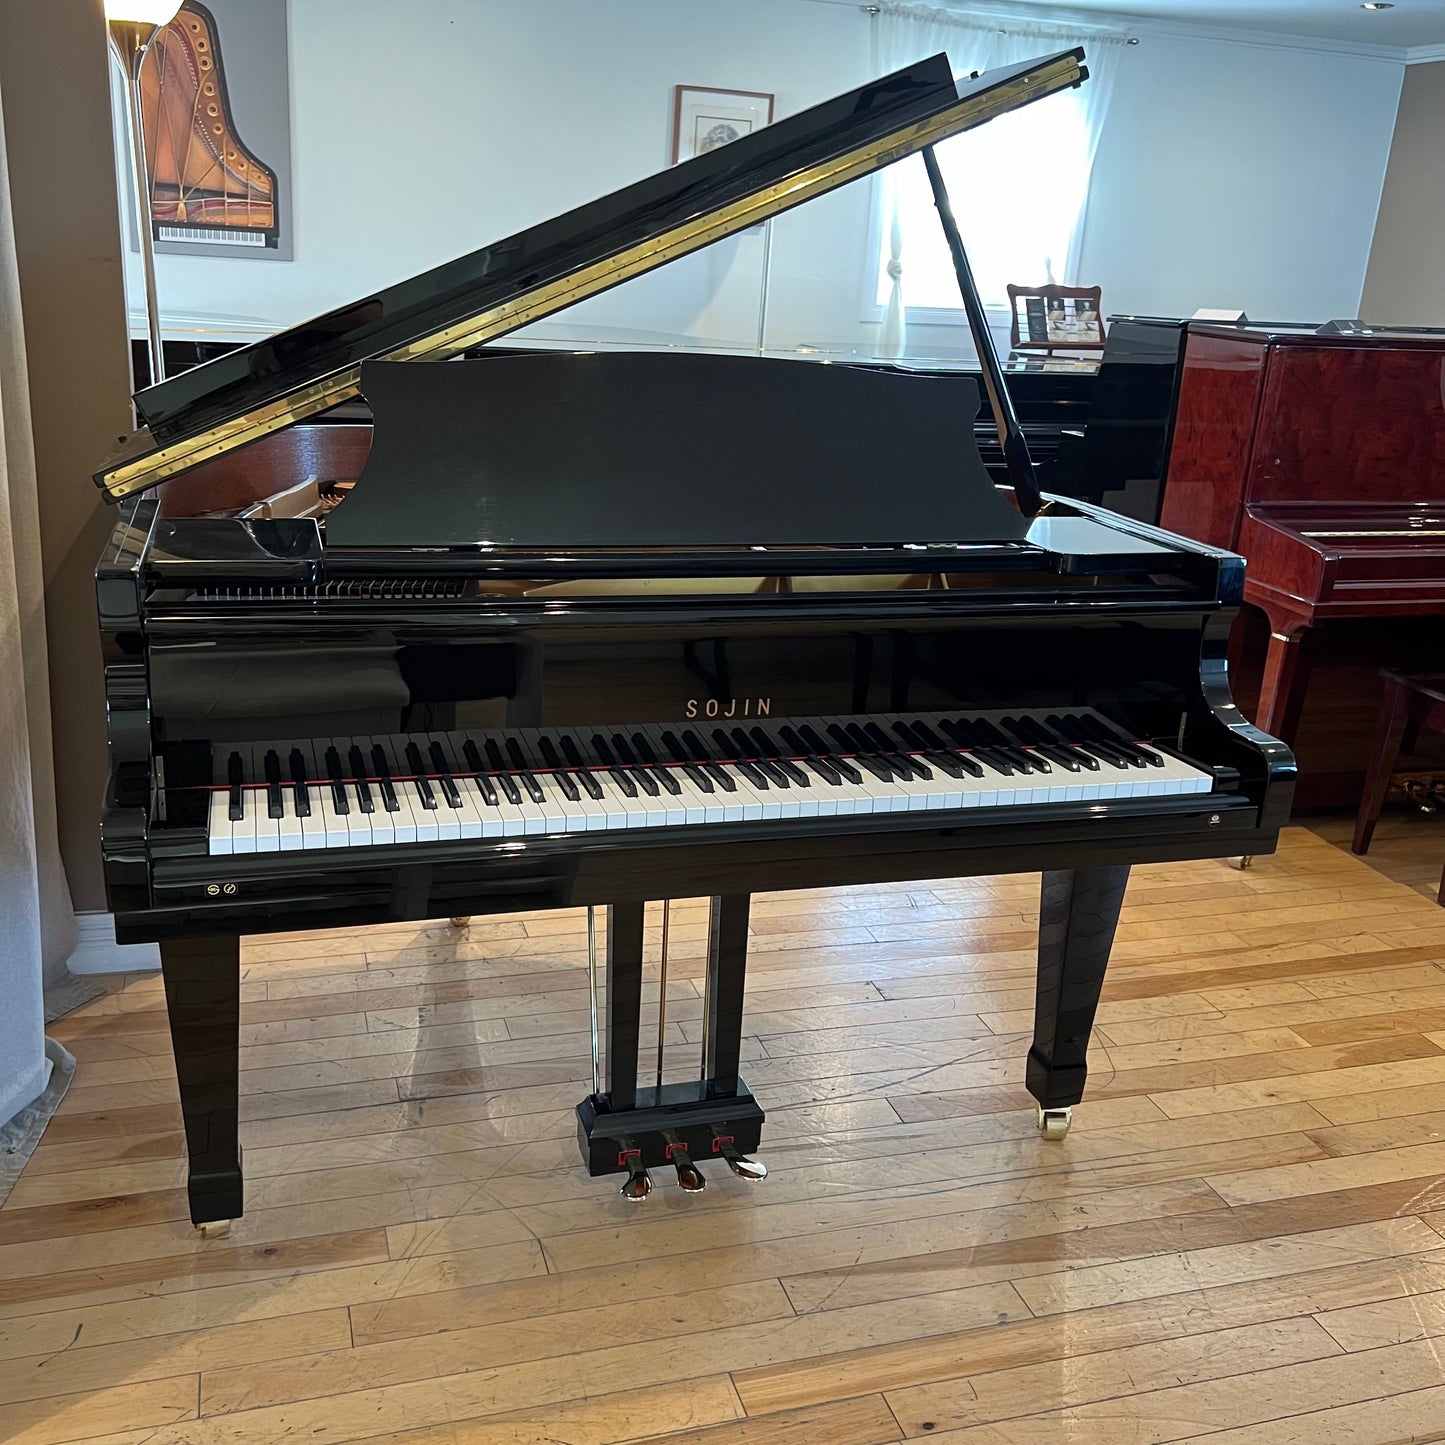 Sojin baby grand piano - 4' 8" (143cm)